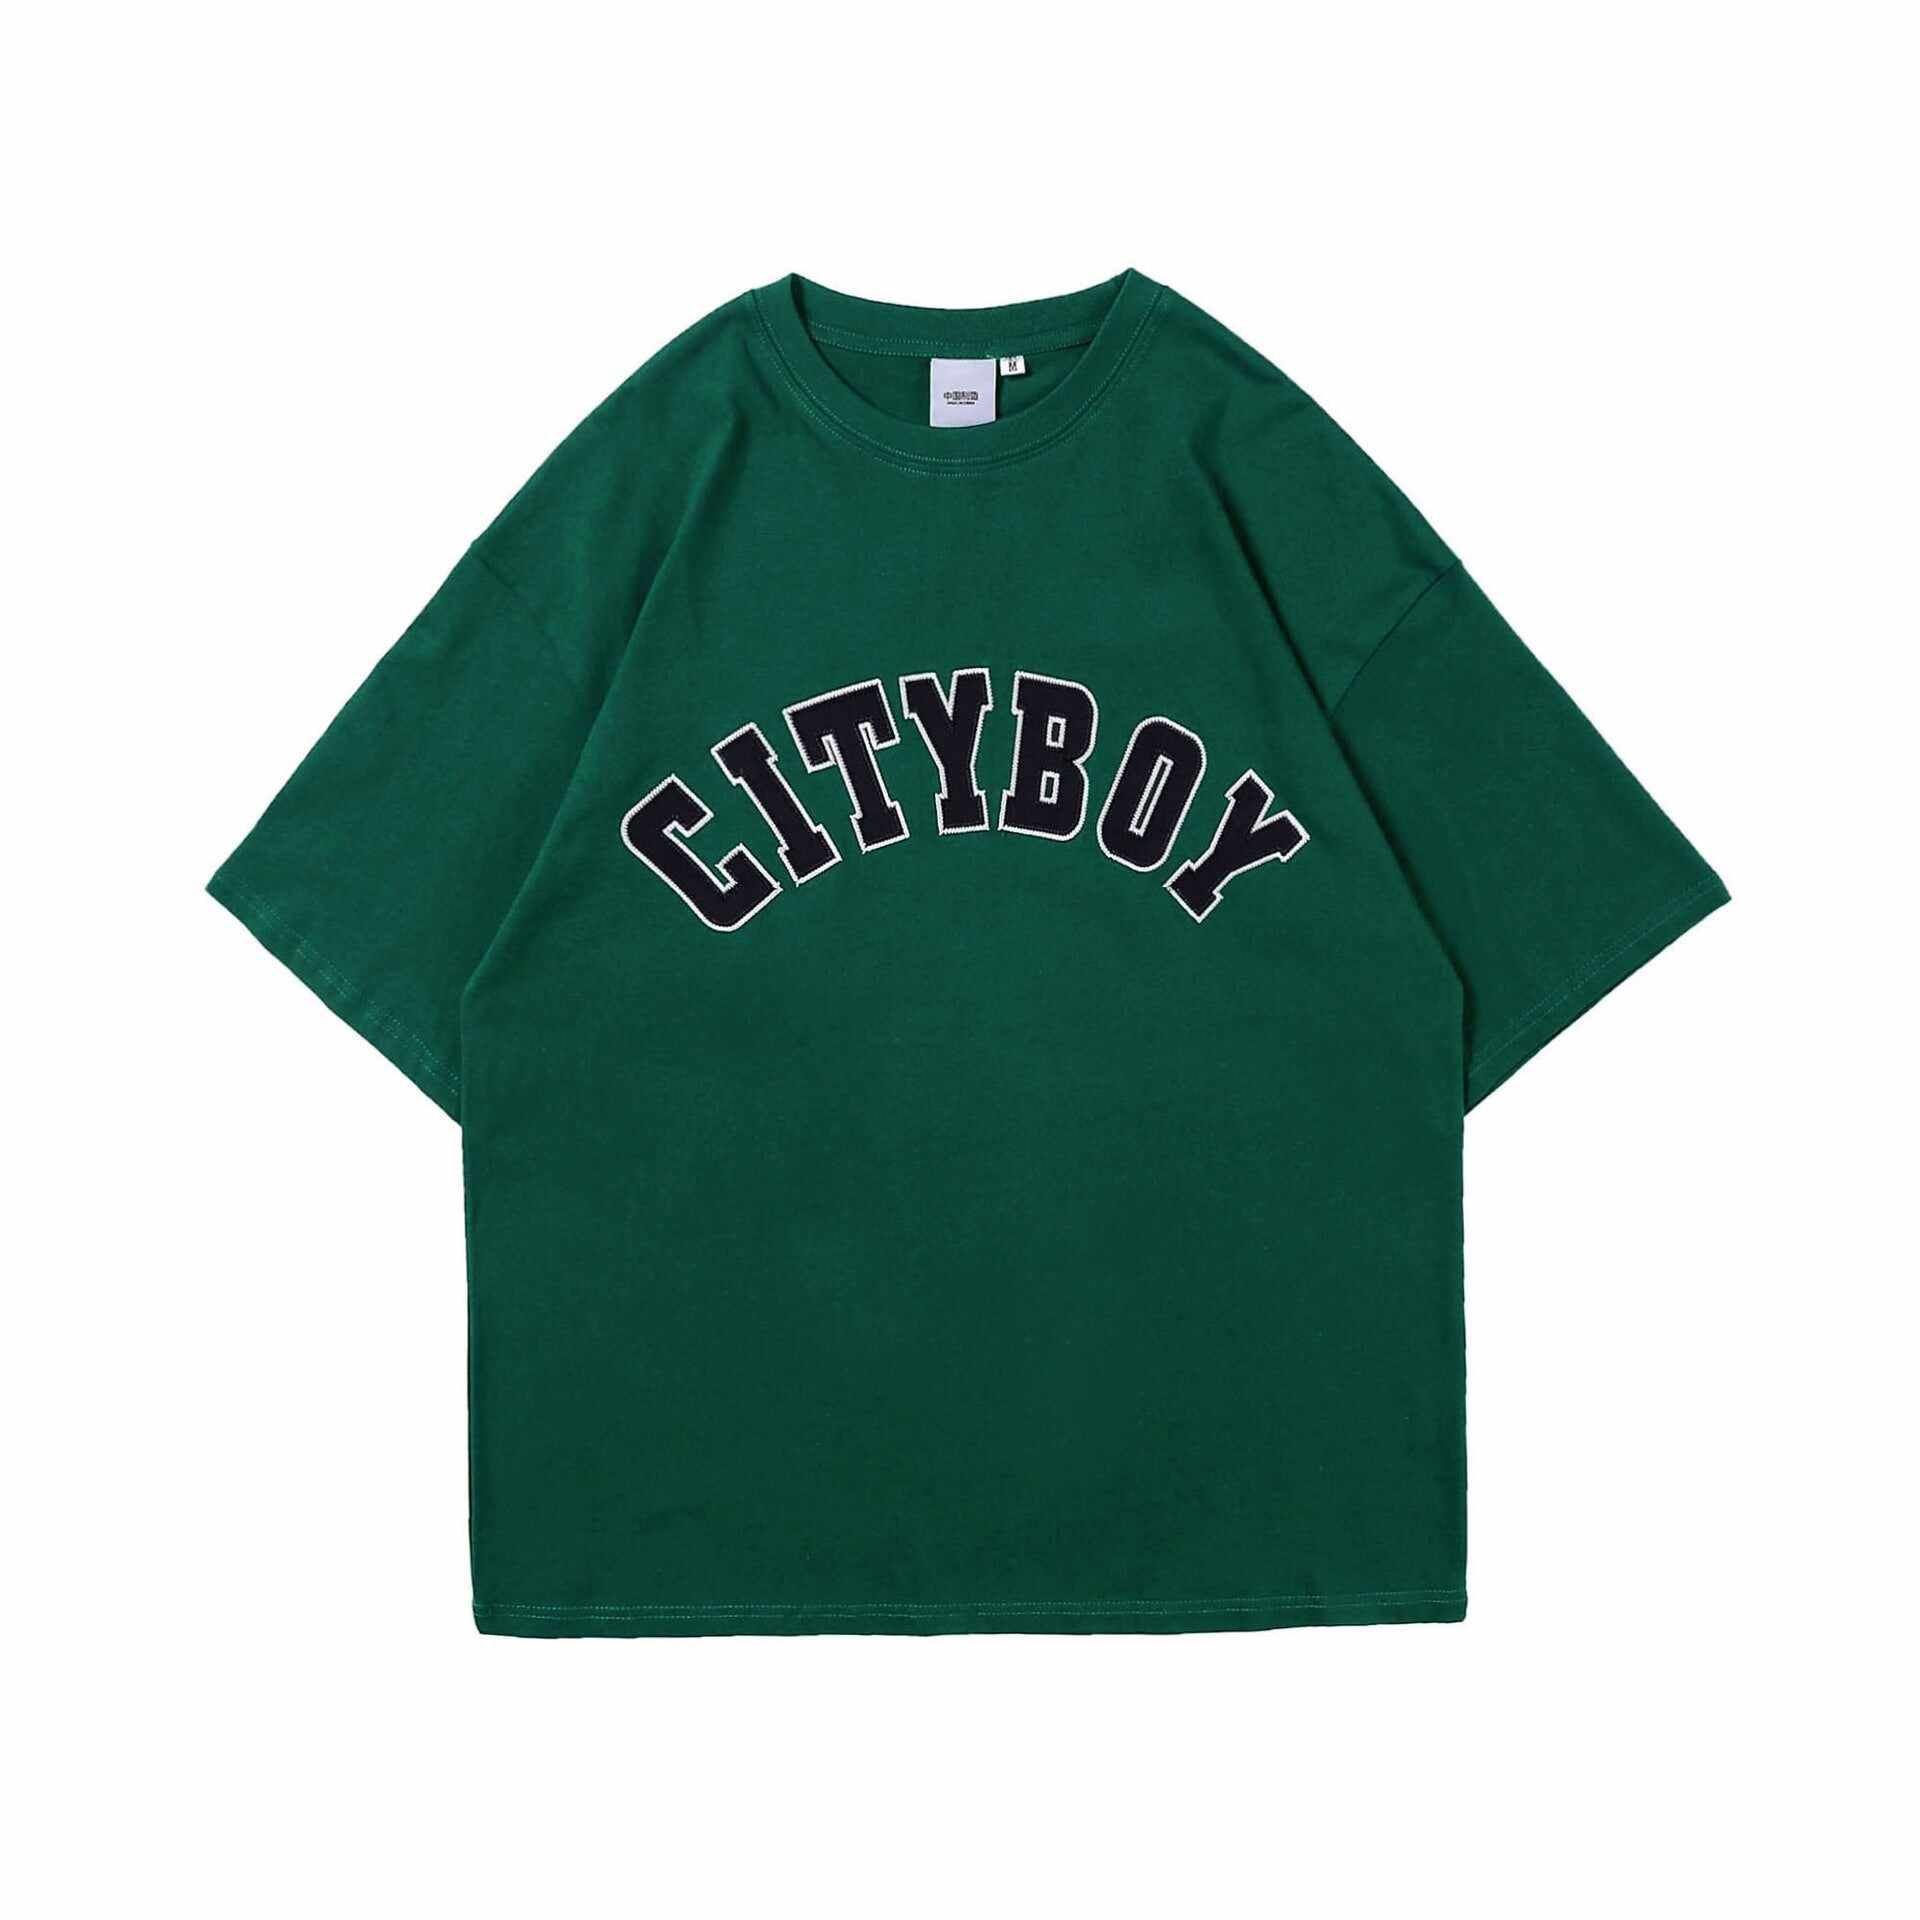 Cityboy T-shirt